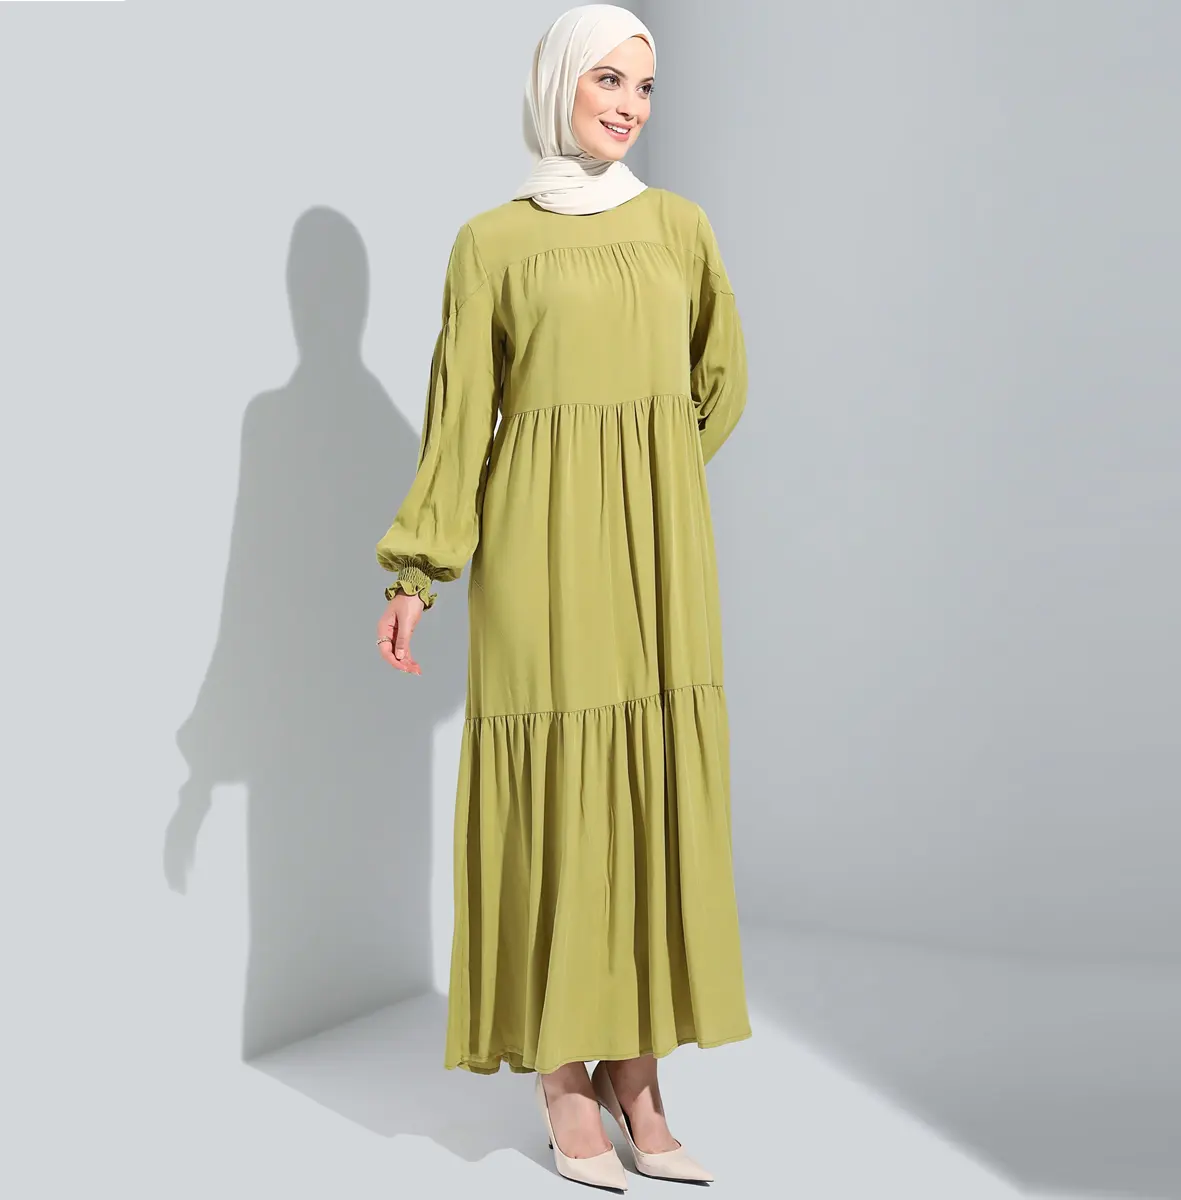 Pernikahan muslim sederhana mewah jersey desain baru bergaya manxun abaya enfant Arab saudi wanita dubai